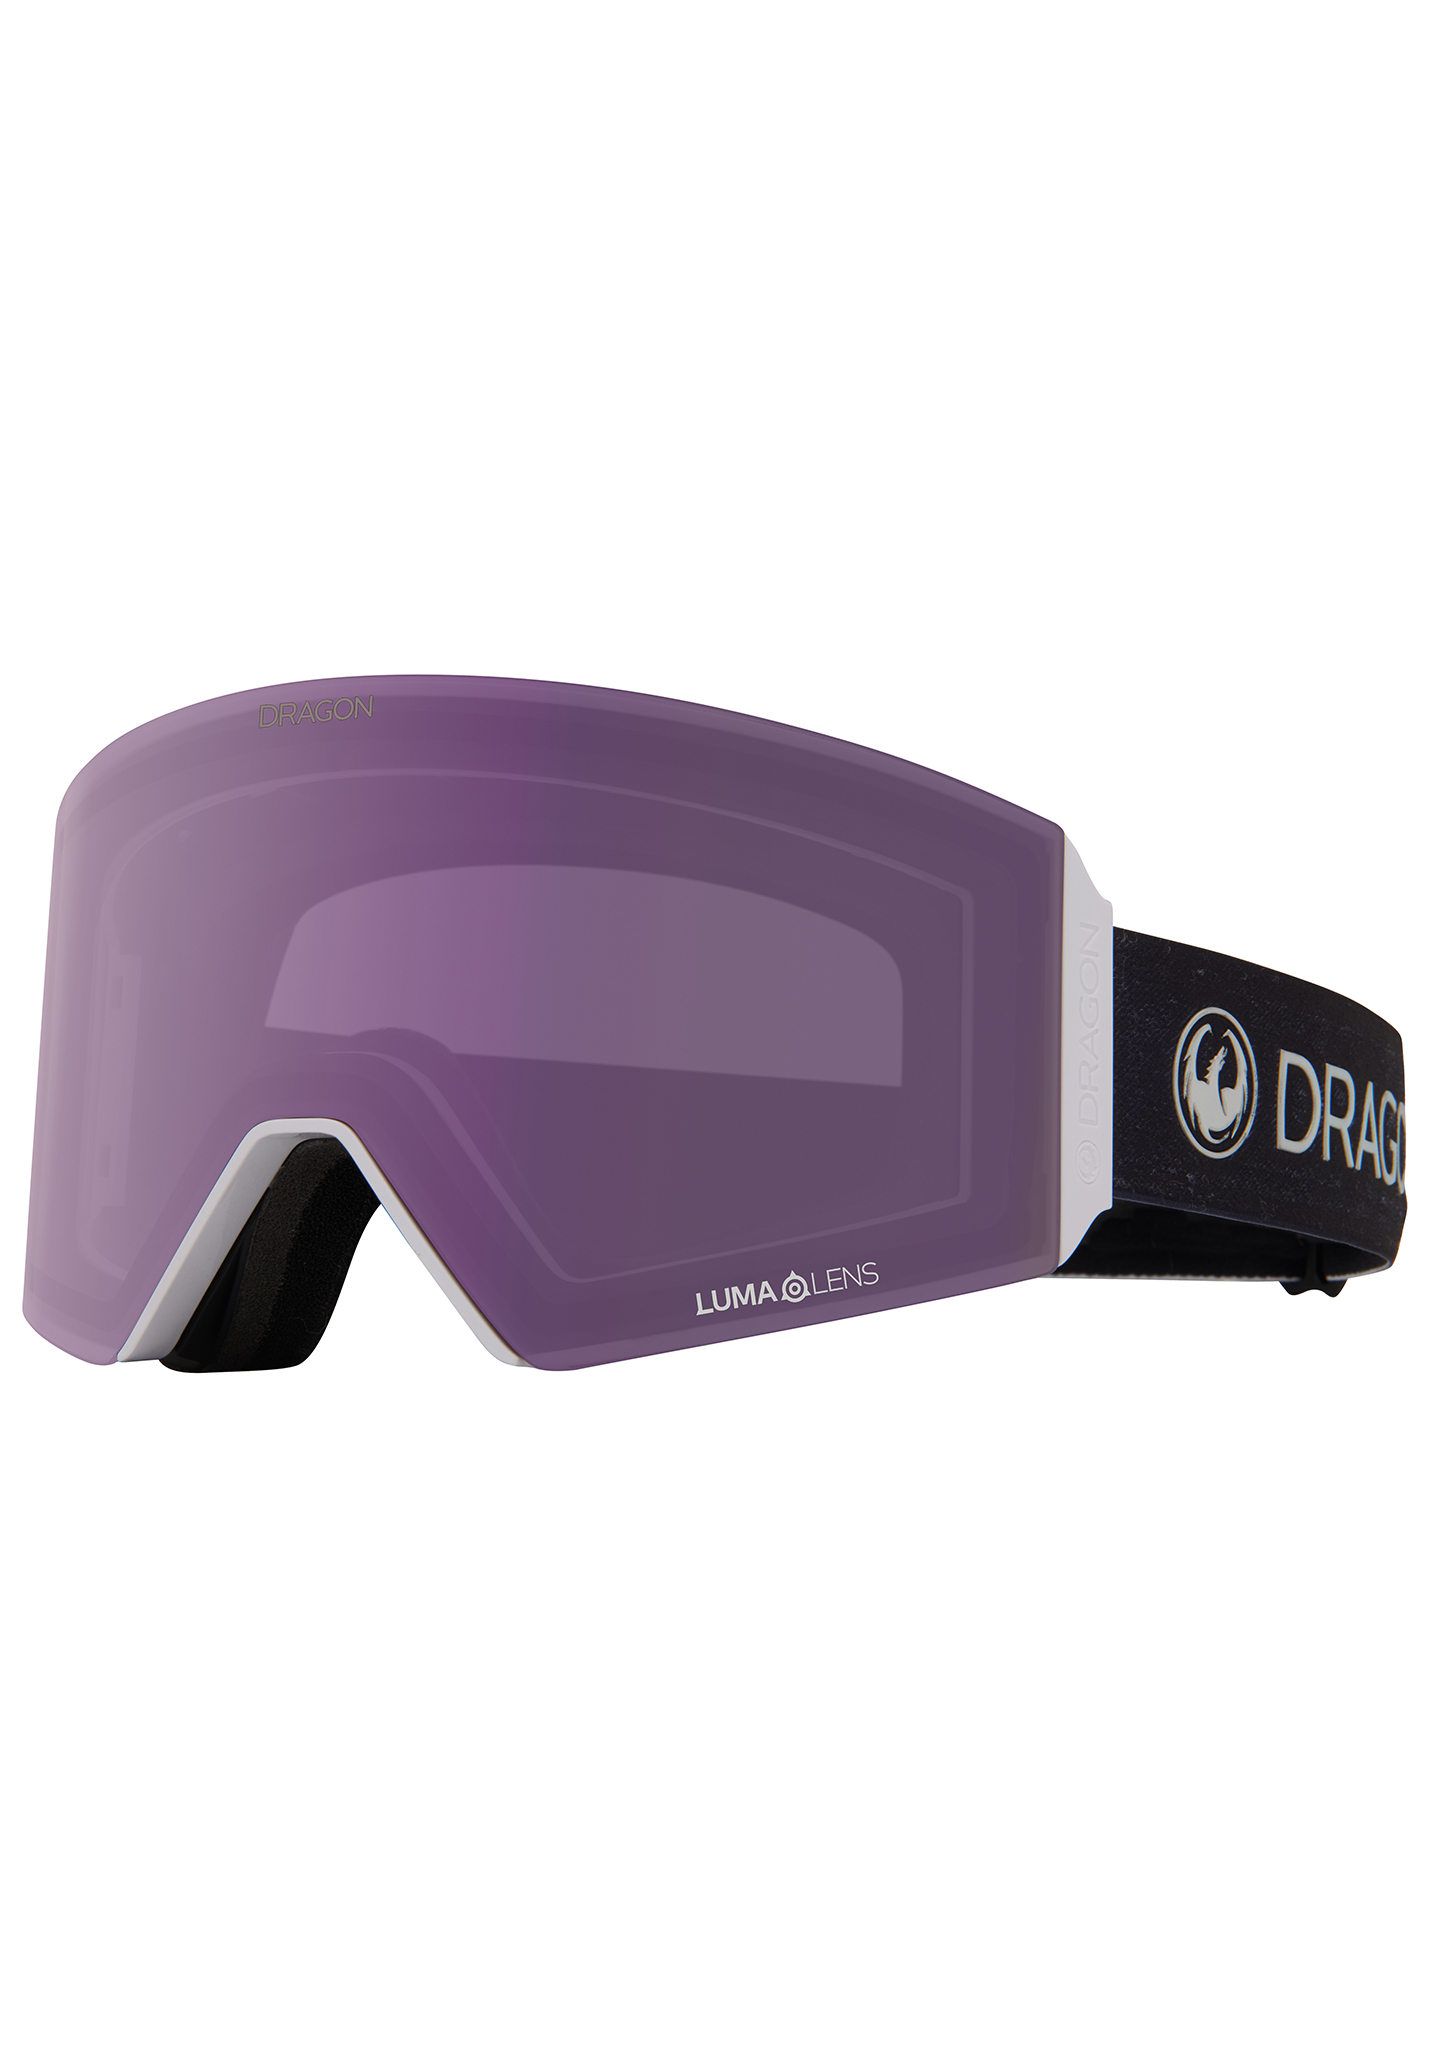 Dragon RVX OTG Snowboardbrillen geteilt / lumalens violett + lumalens lila One Size